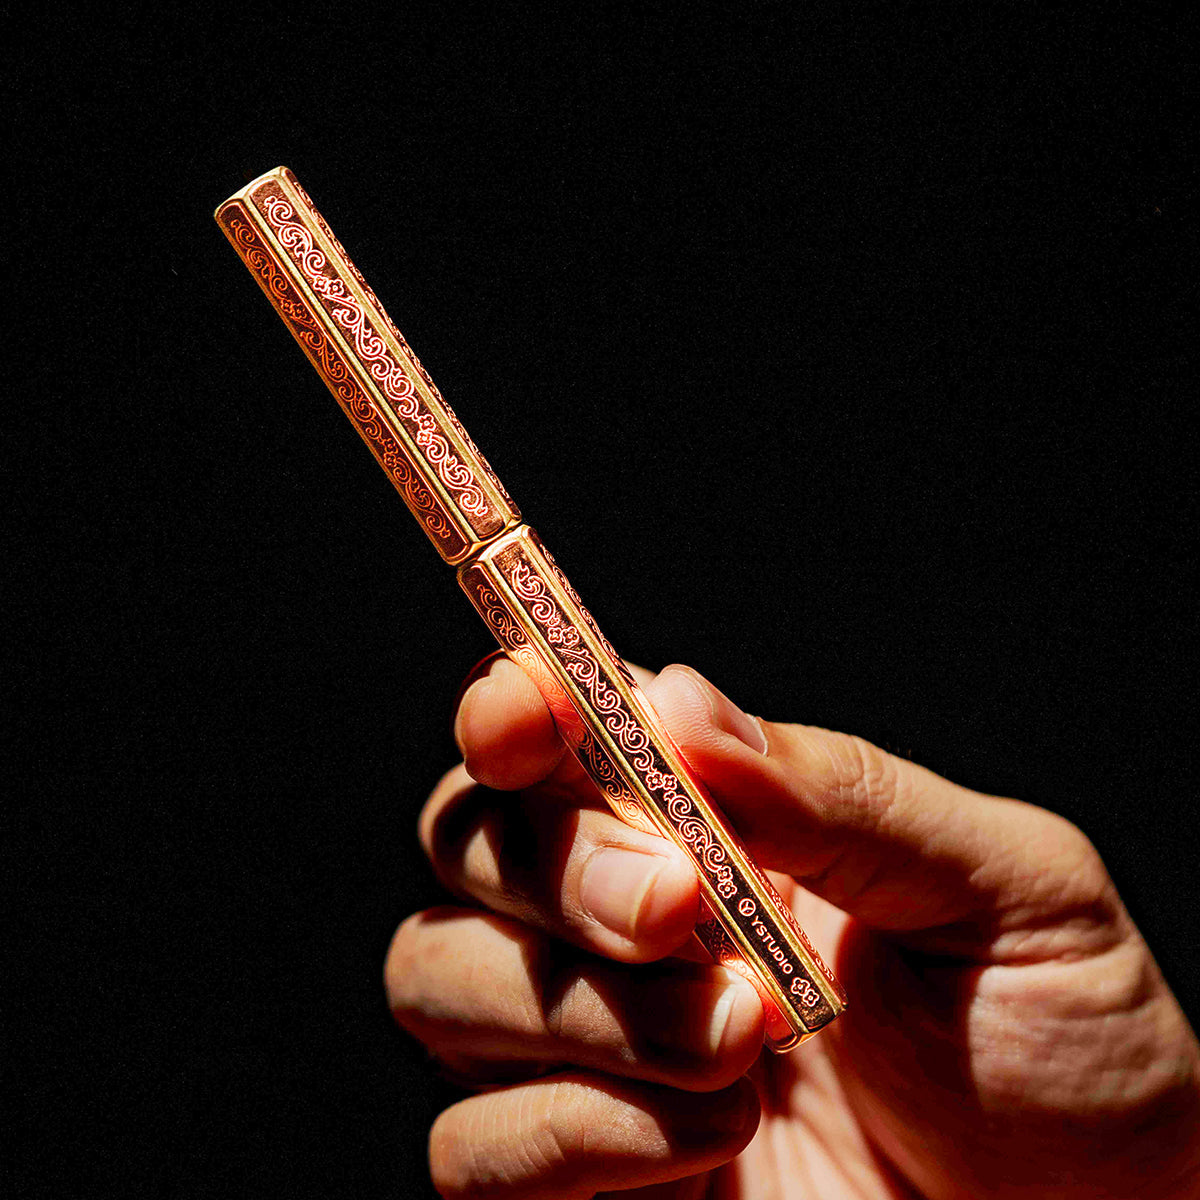 YSTUDIO - Classic Renaissance KAZARI KANAGU ORCHID Rollerball Pen